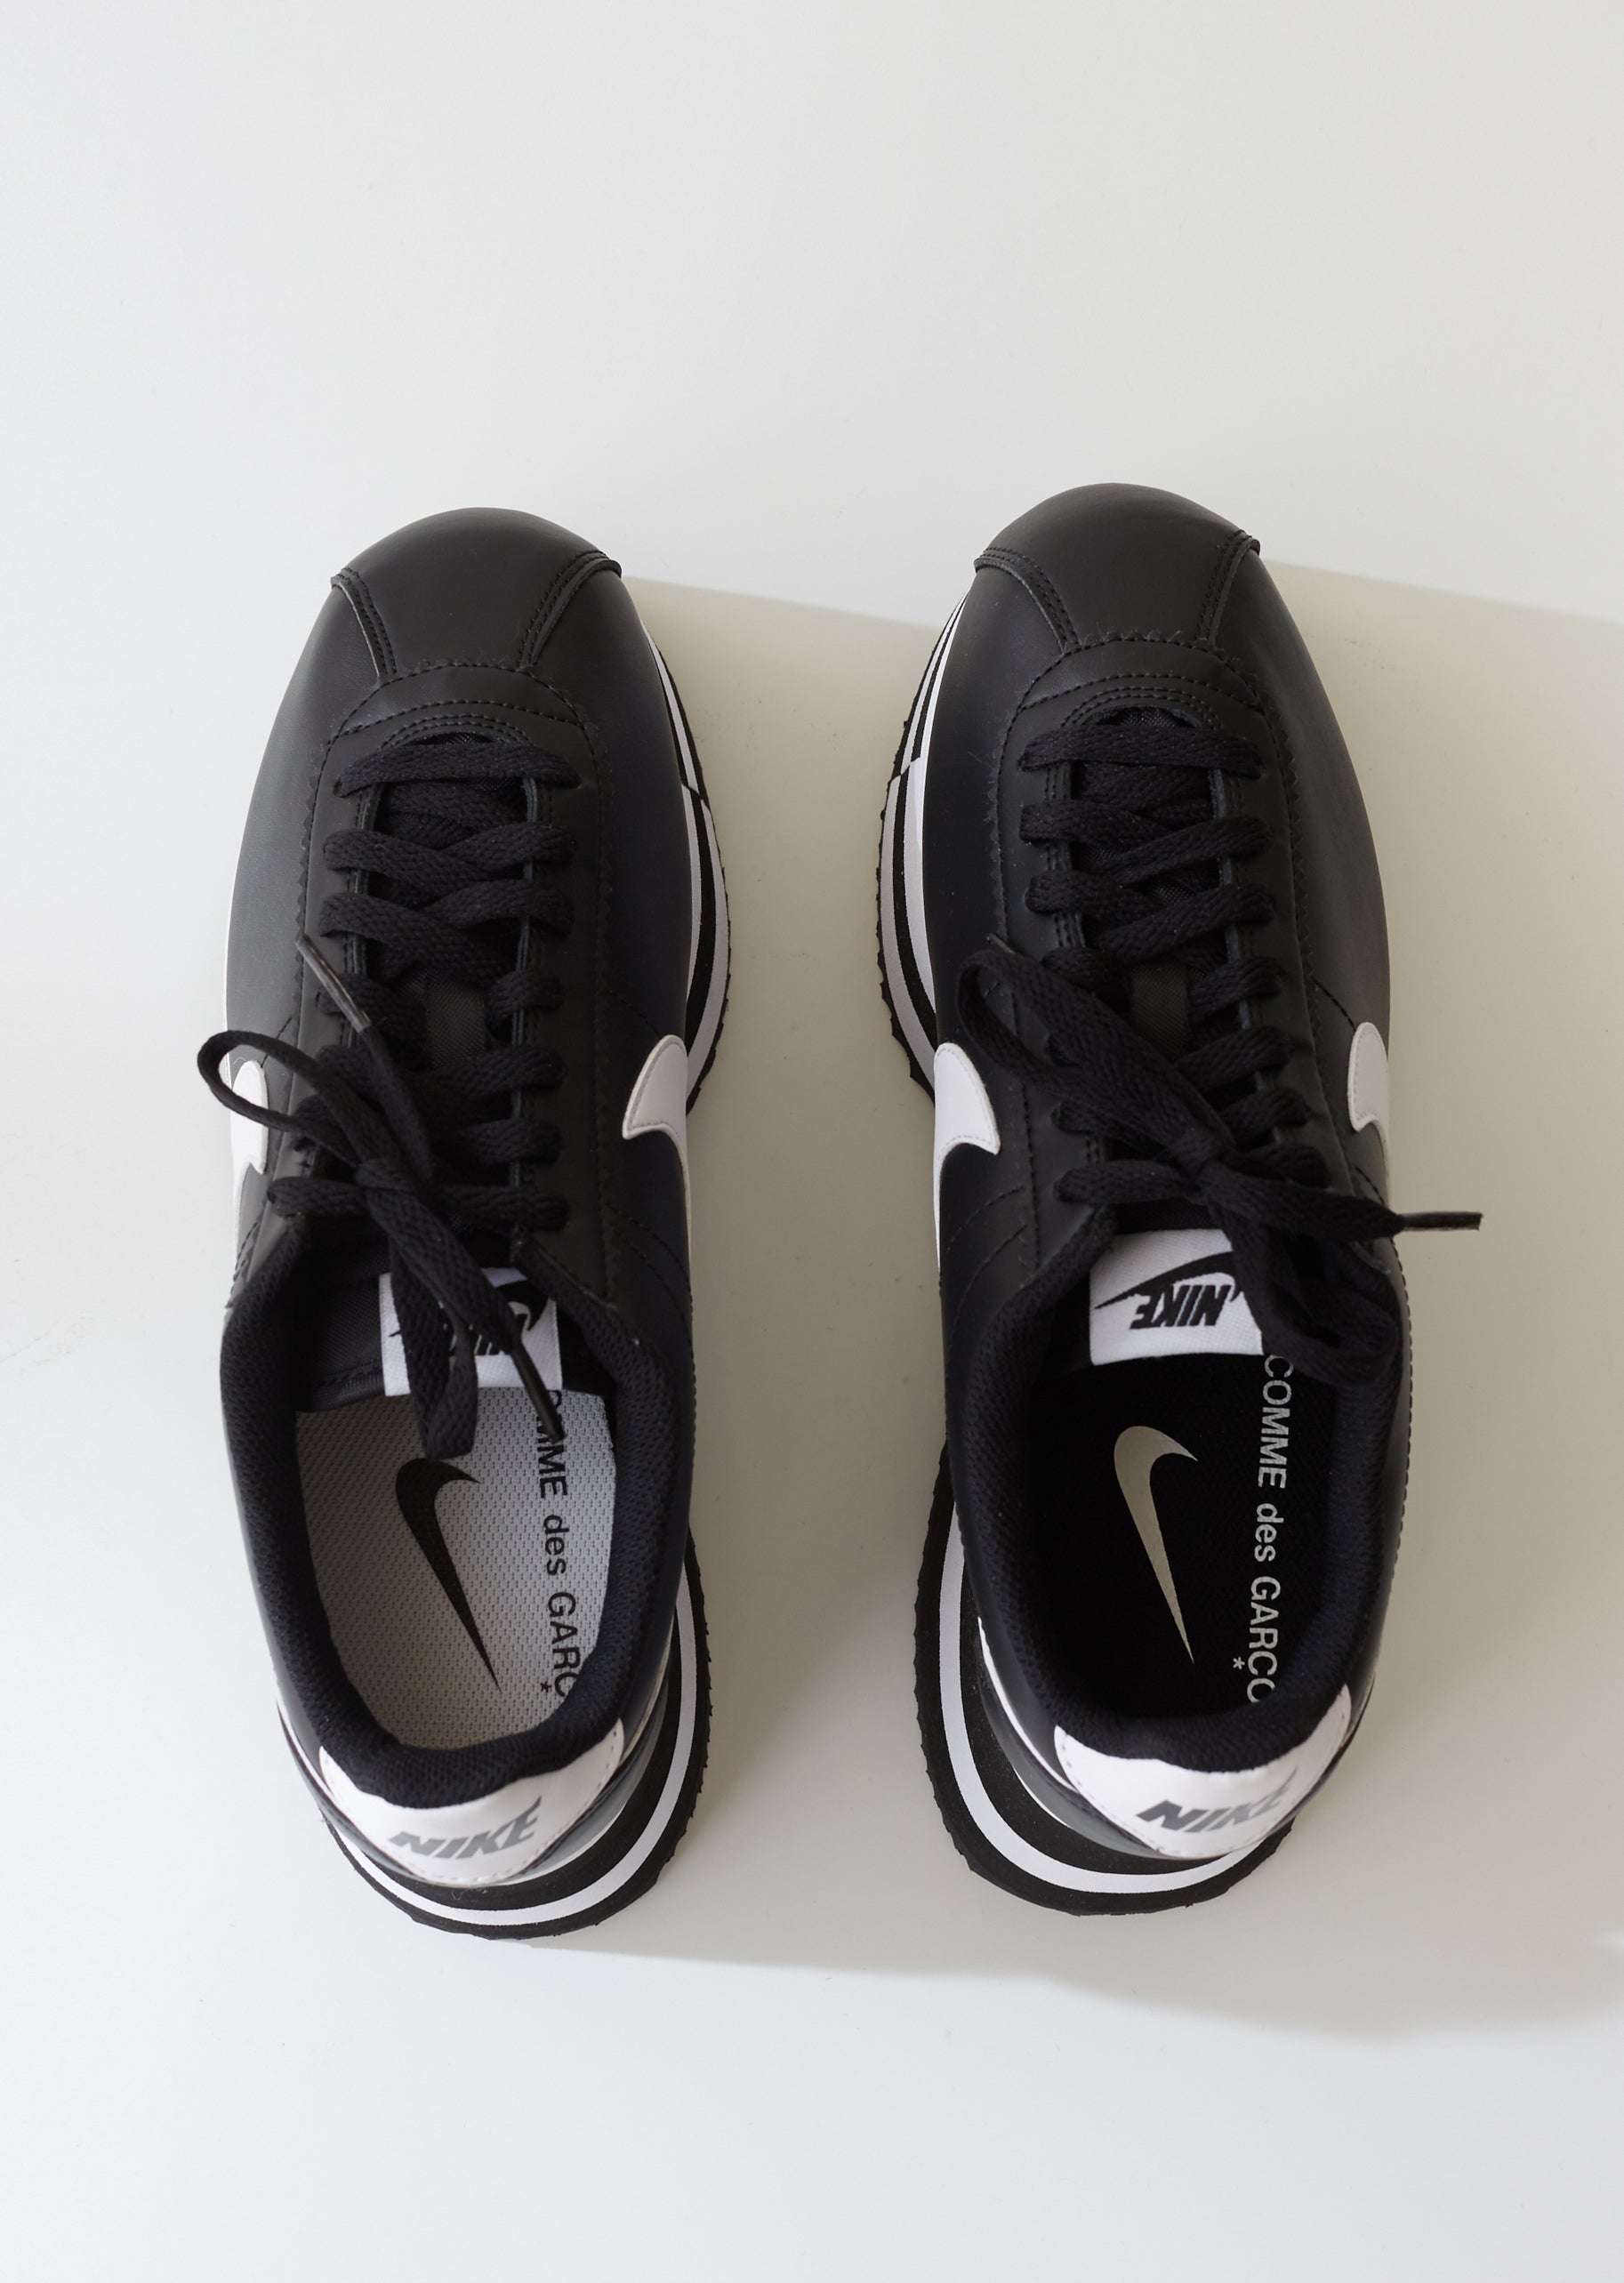 Nike Classic Cortez Premium Women's Shoe Size 6 (Black)